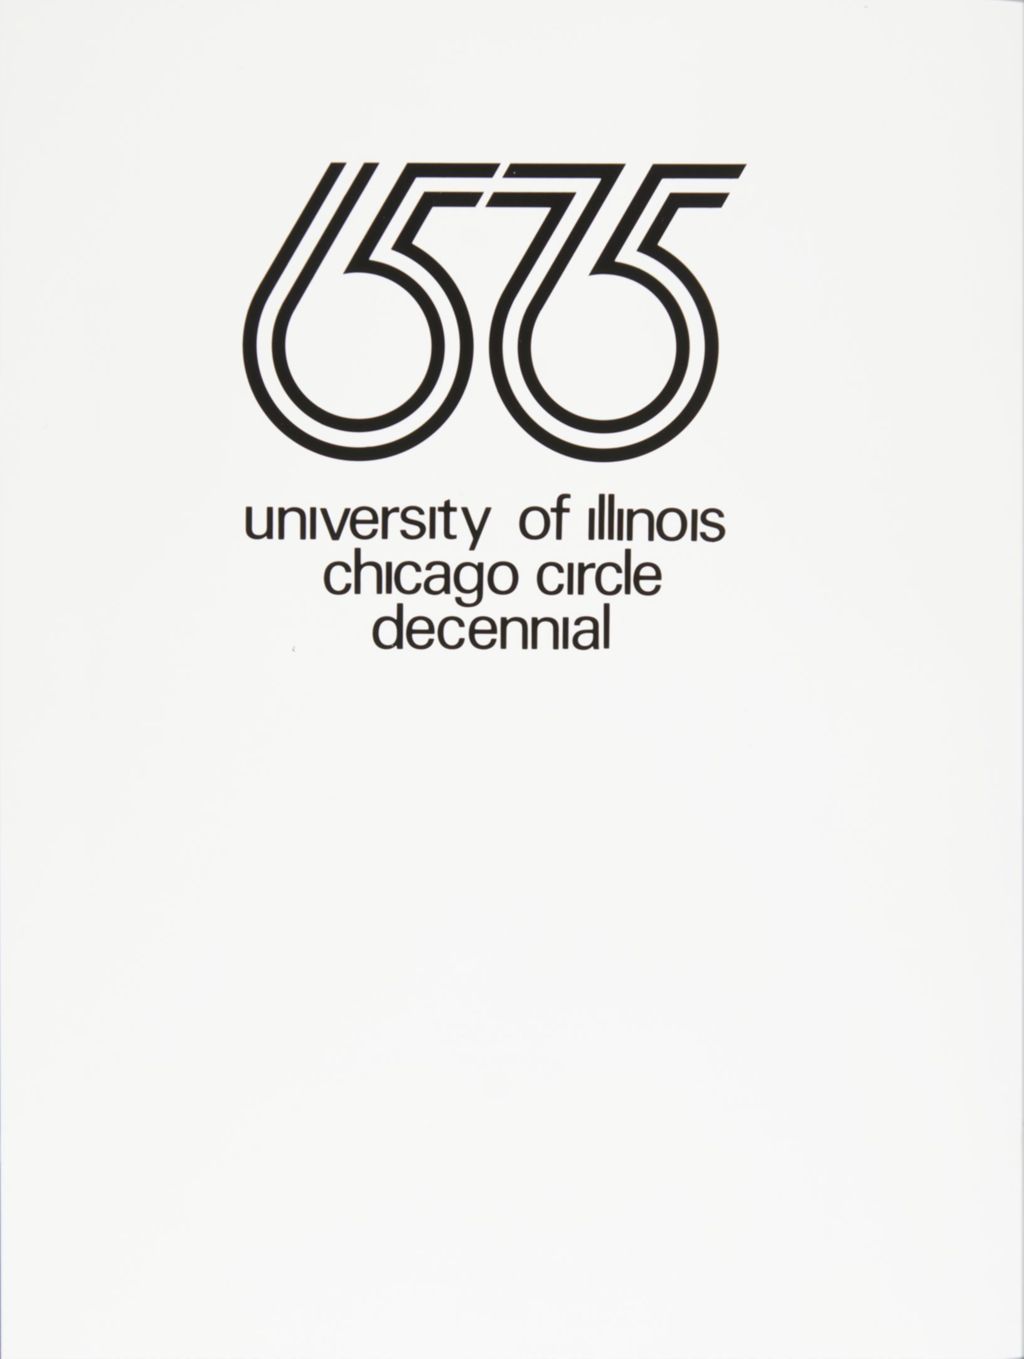 Miniature of Logo for the Decennial celebration